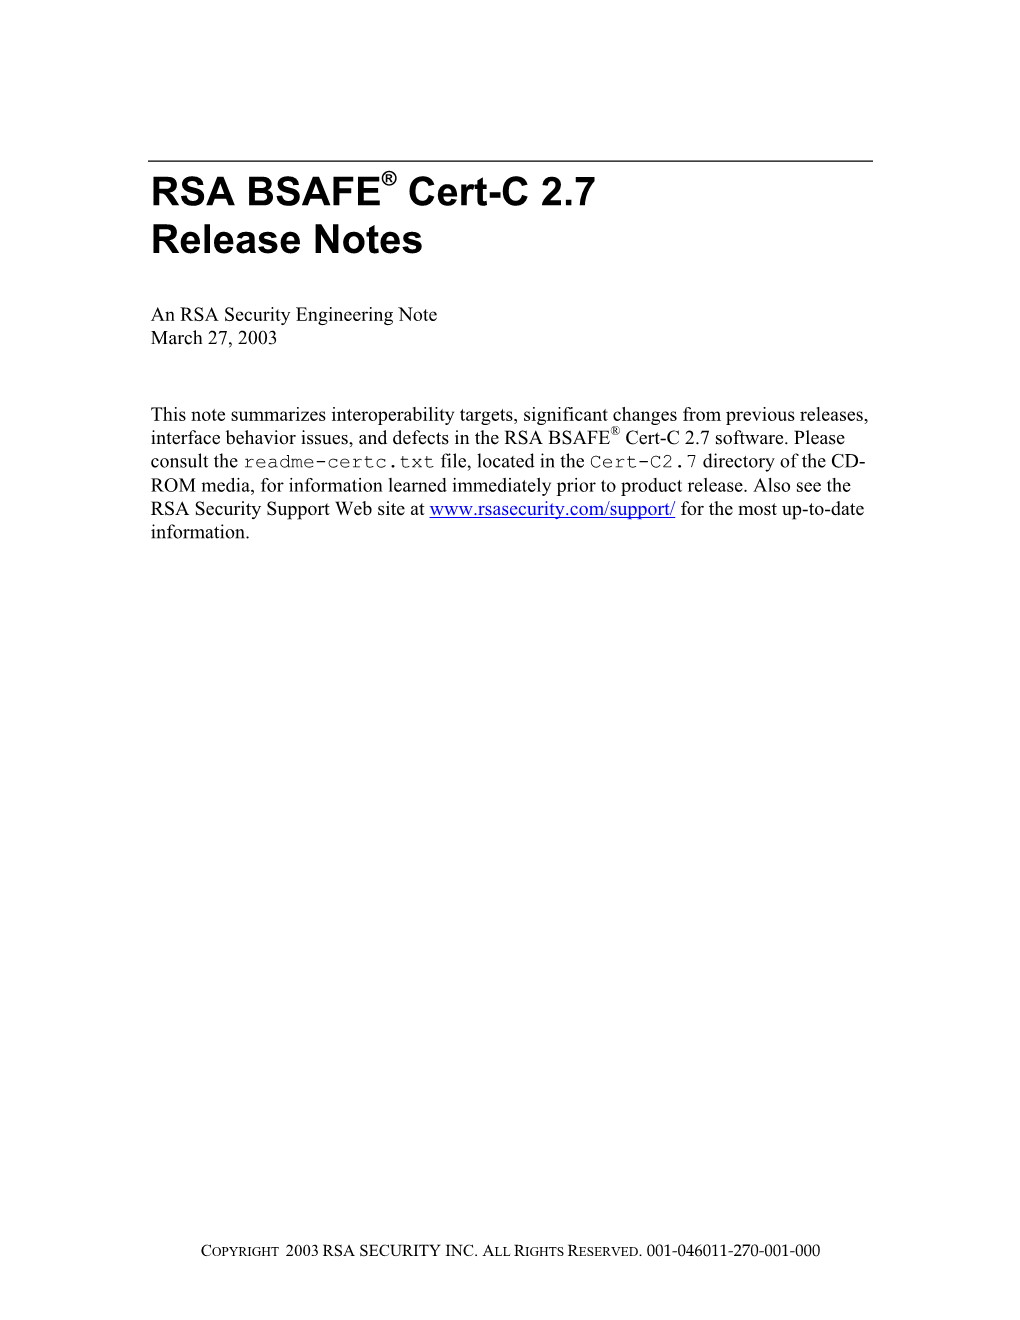 RSA BSAFE® Cert-C 2.7 Release Notes